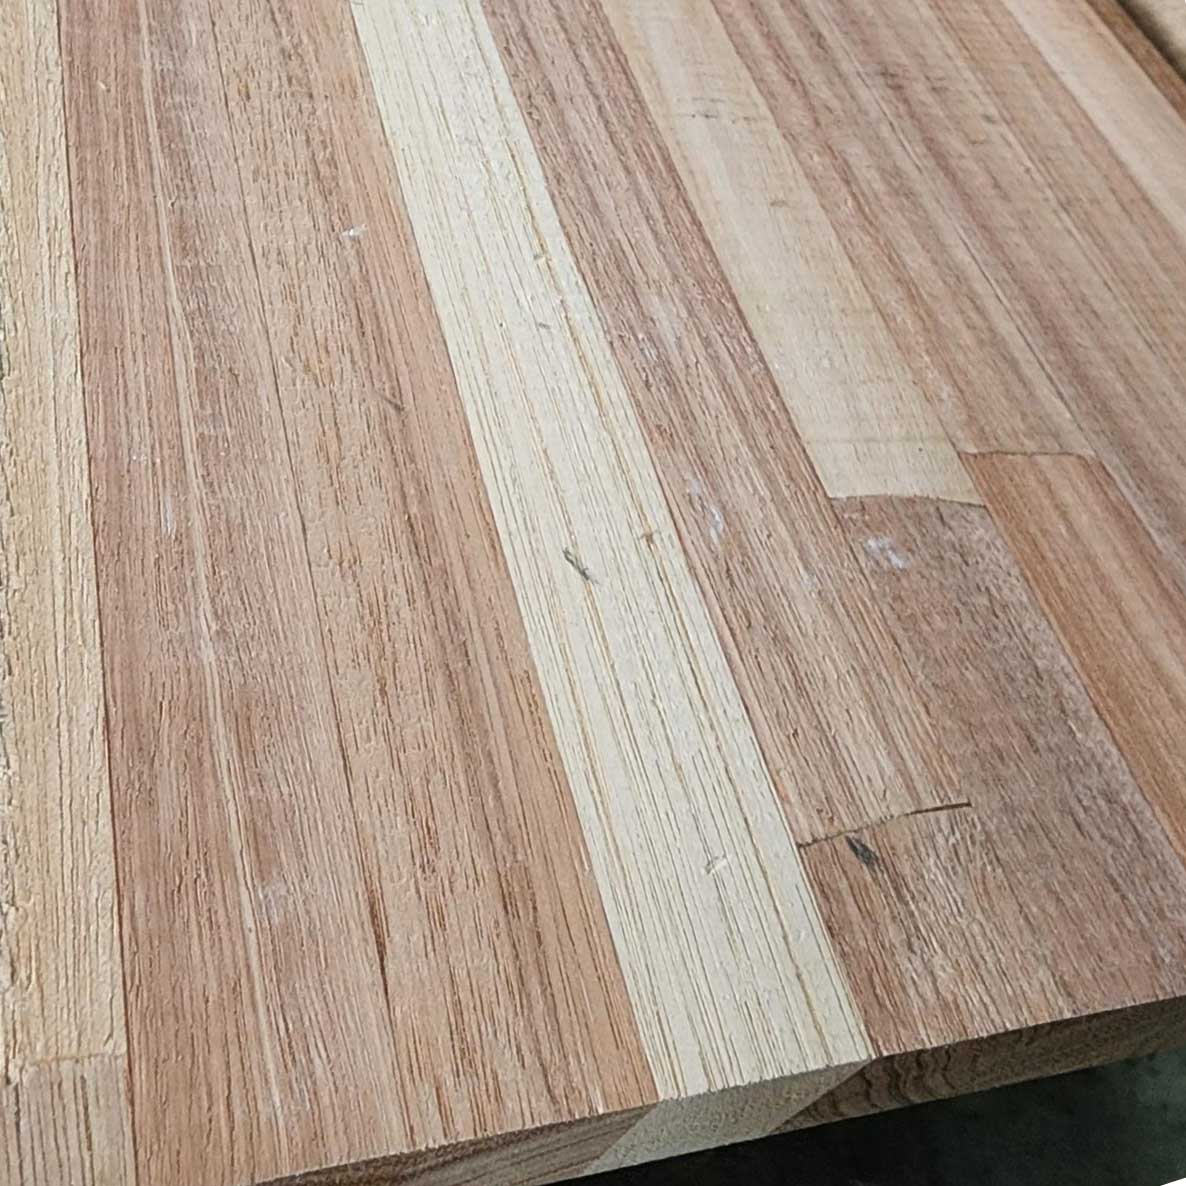 Mixed Hardwood SCTB Shiplap Flooring